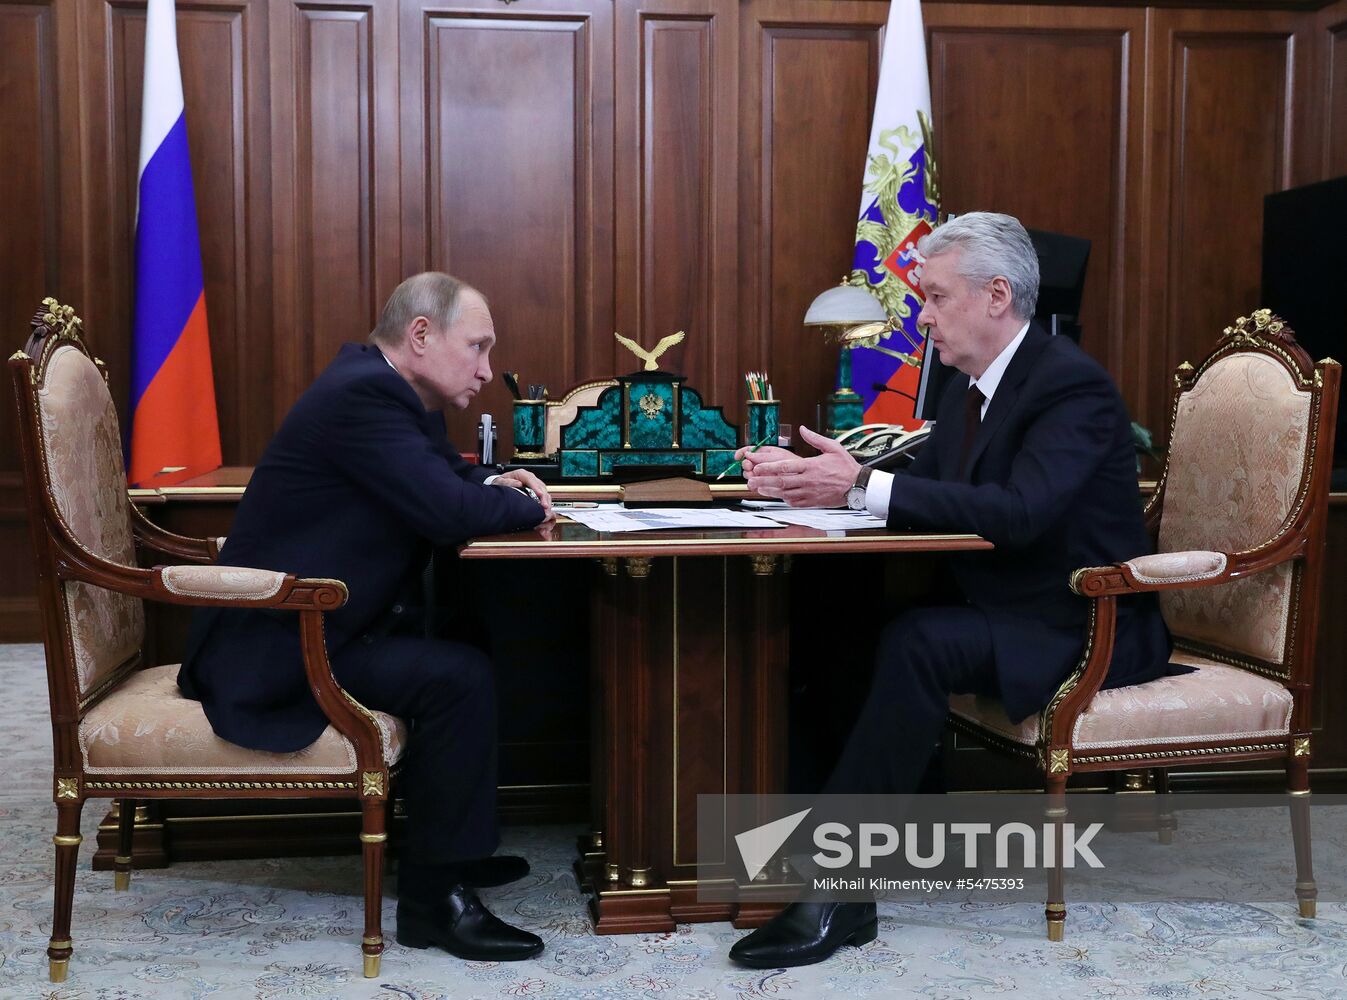 President Vladimir Putin meets with Moscow Mayor Sergei Sobyanin